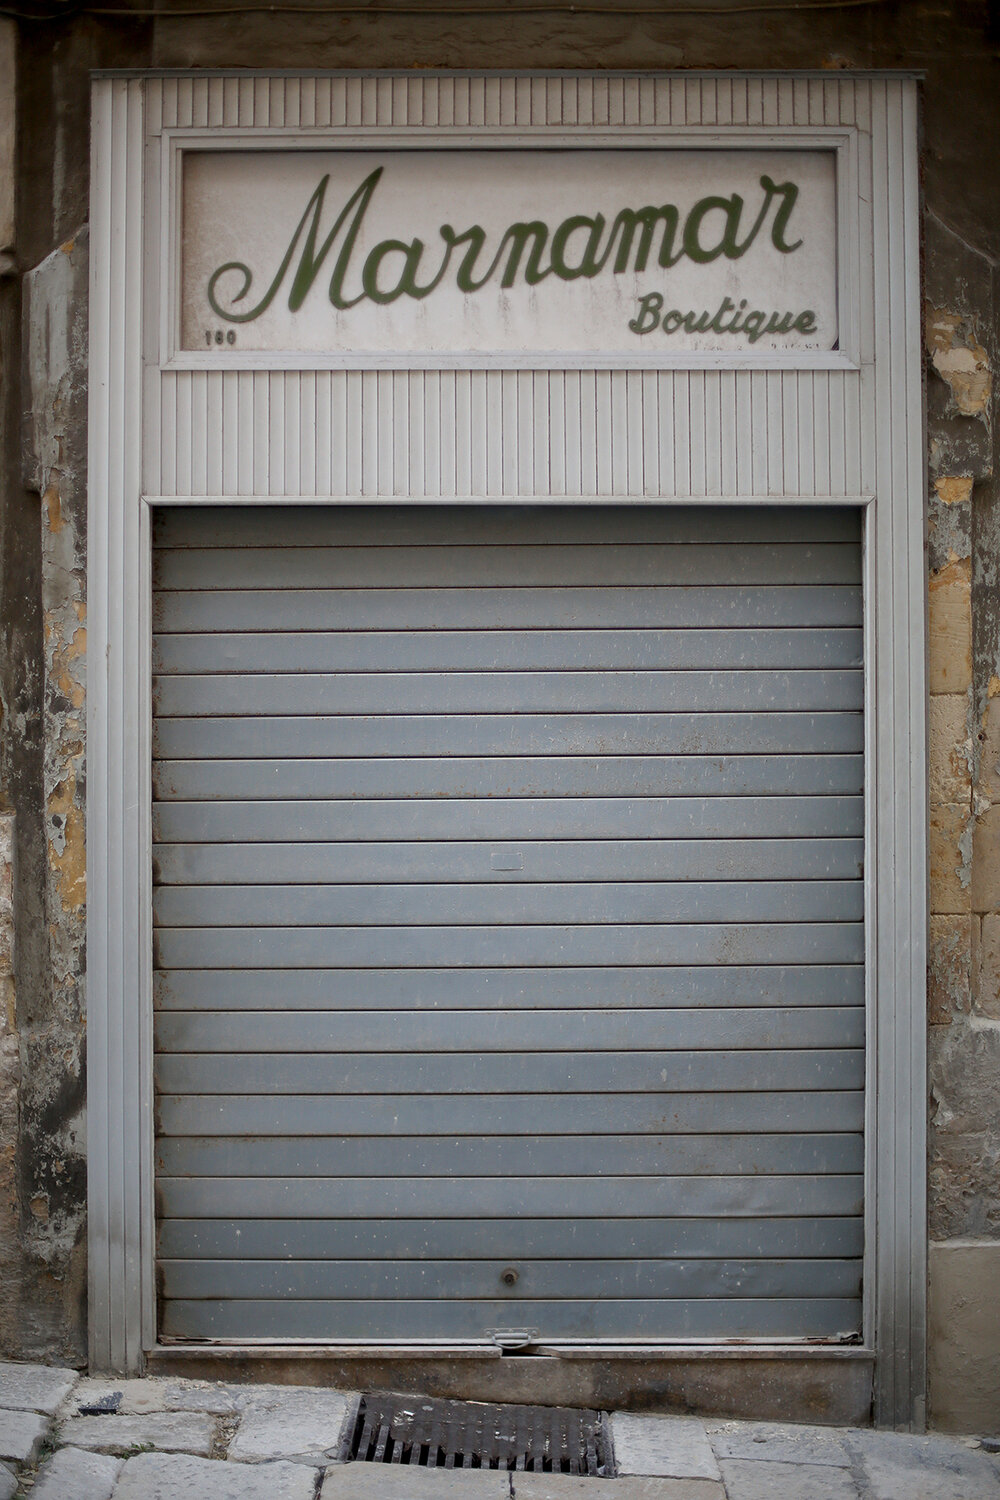  Merchants of Malta (Photo Copyright © Chad Fahs) 